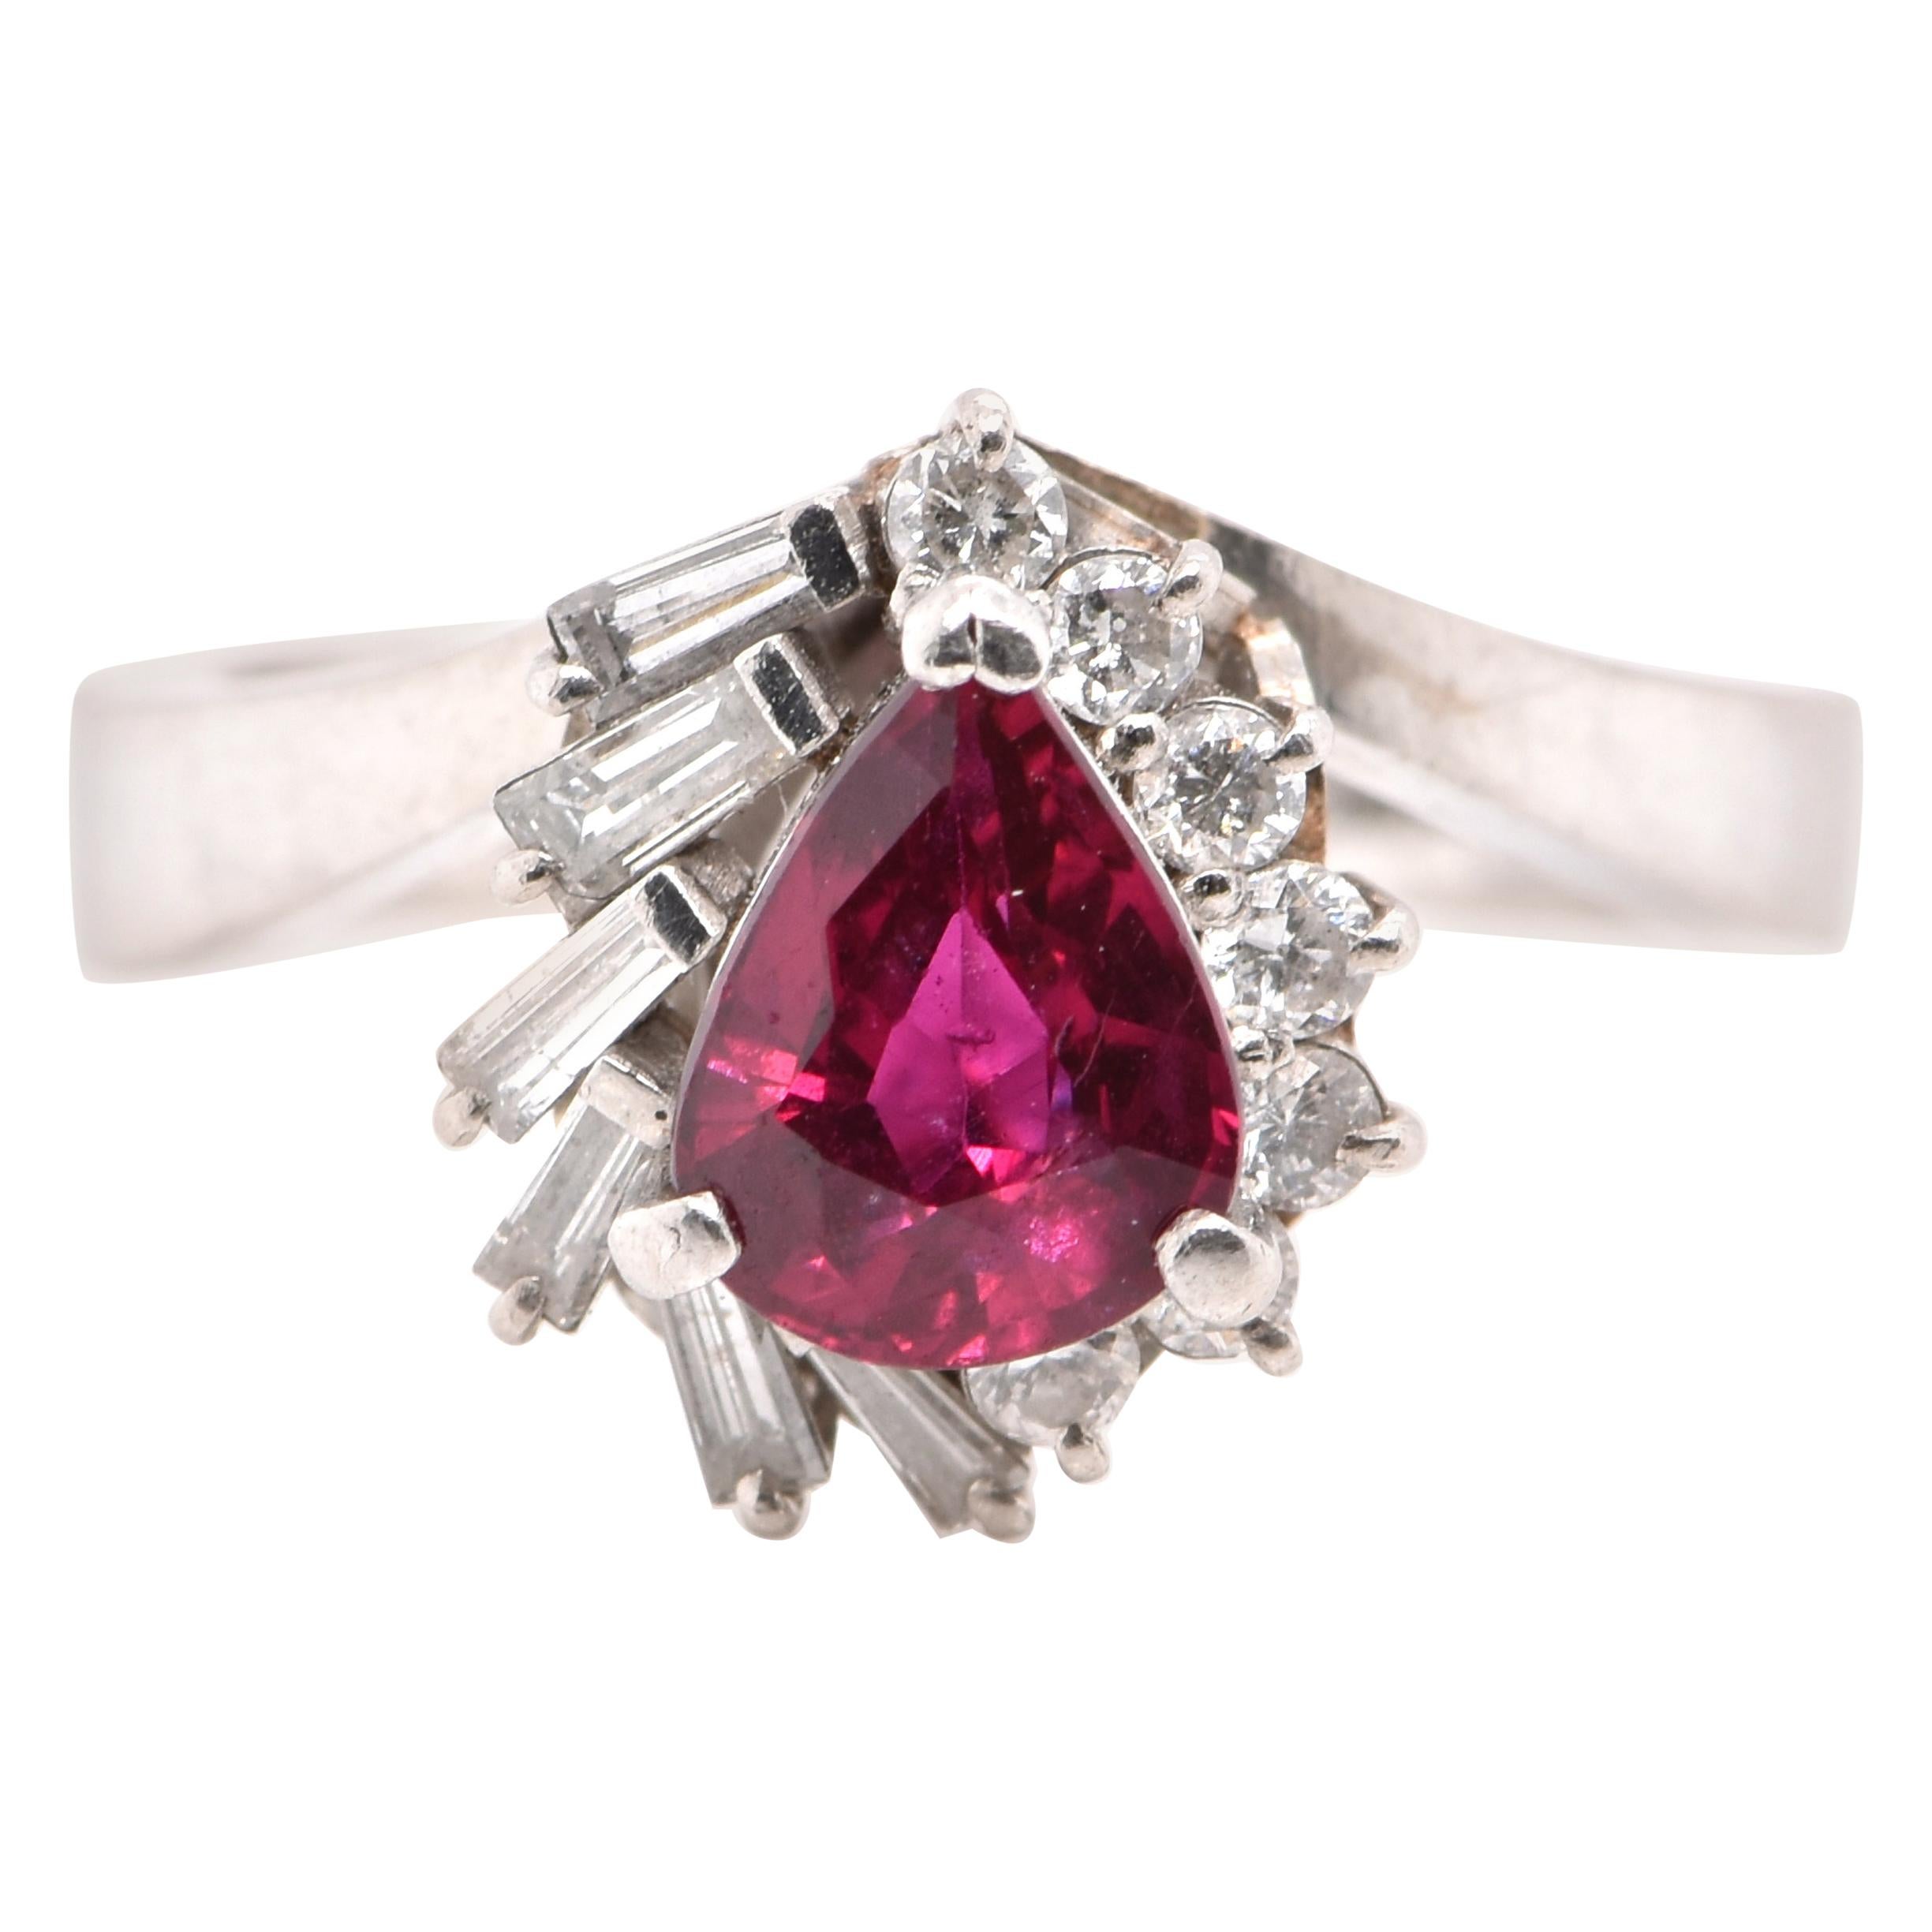 1.17 Carat Natural Ruby and Diamond Antique-Ring Set in Platinum